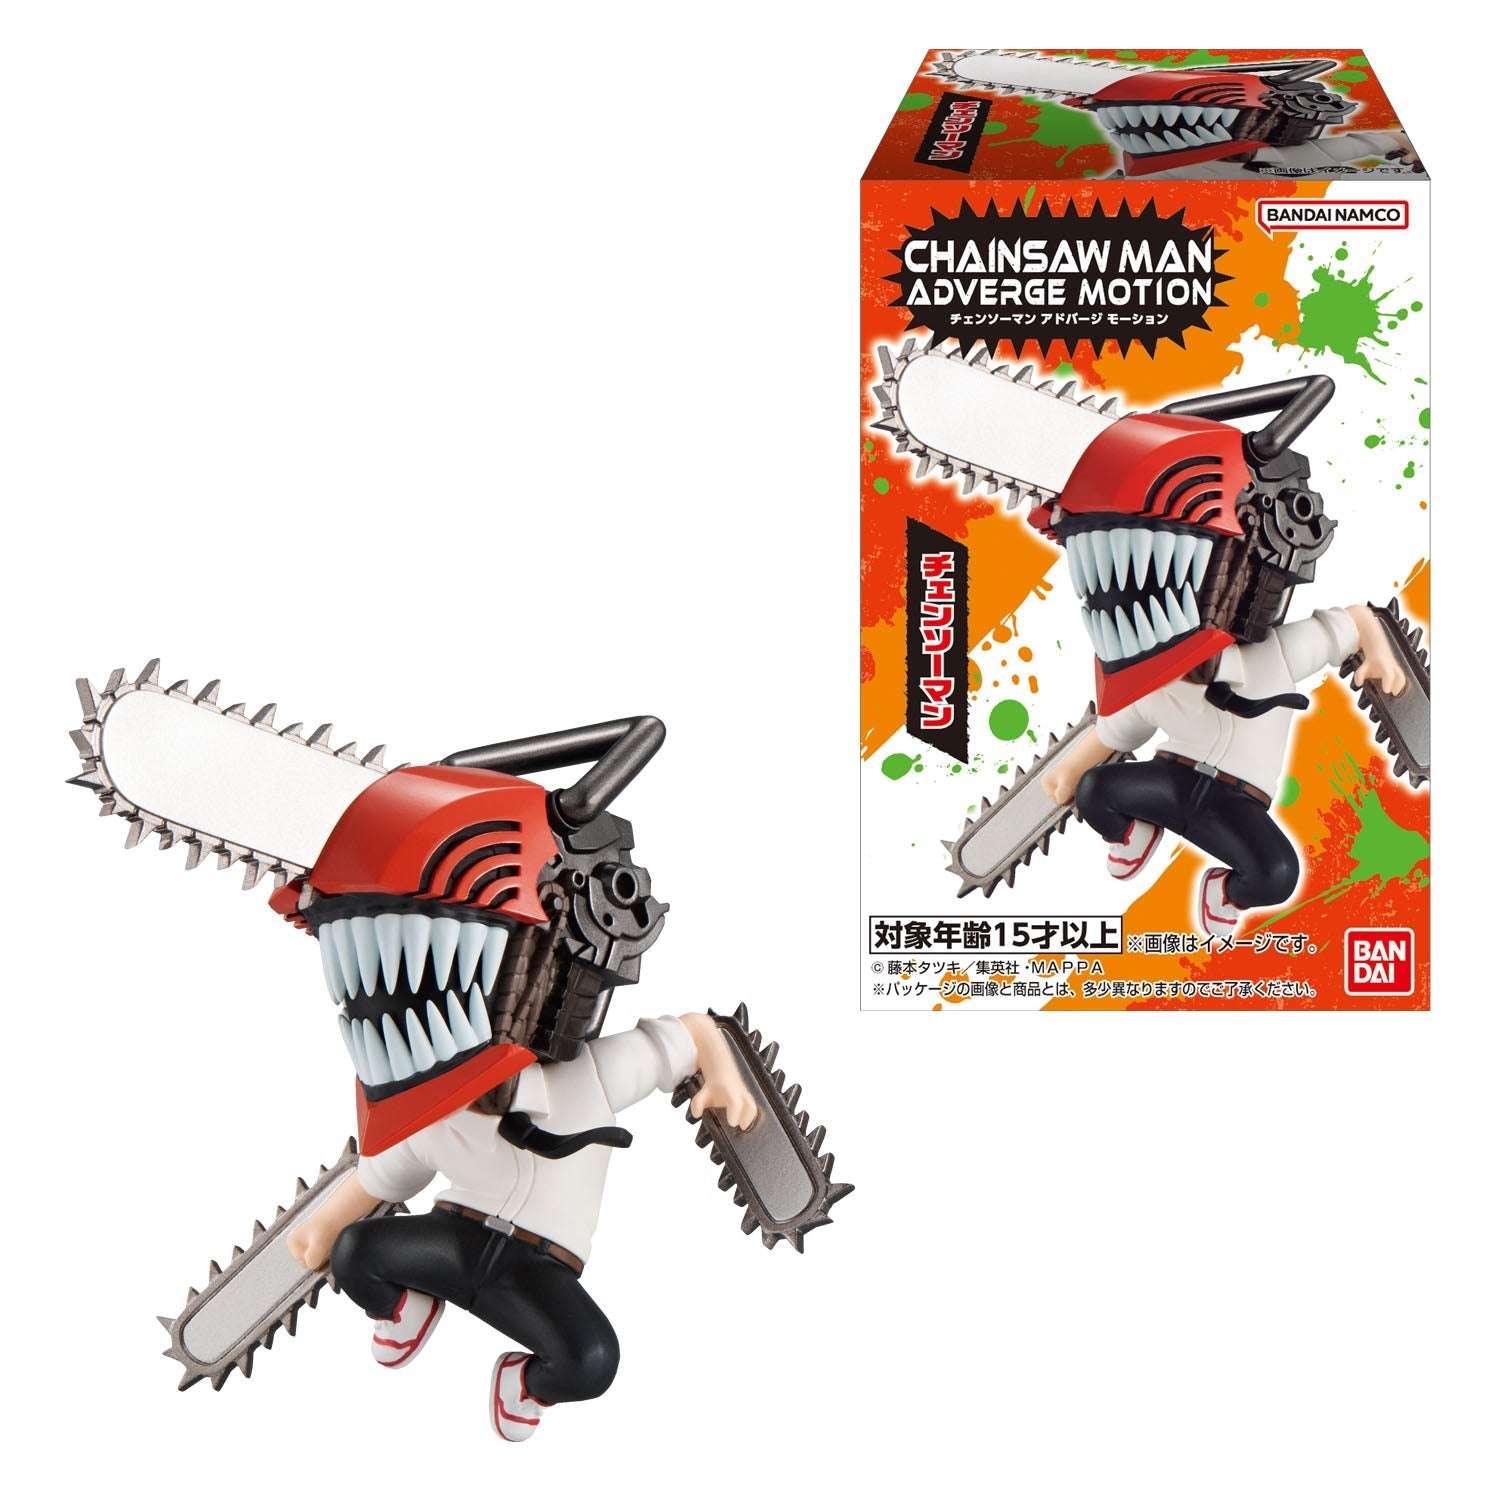 Chainsaw Man - Chainsaw Man 6 Character Adverge Motion Bandai Shokugan Adverge Figure Set image count 1